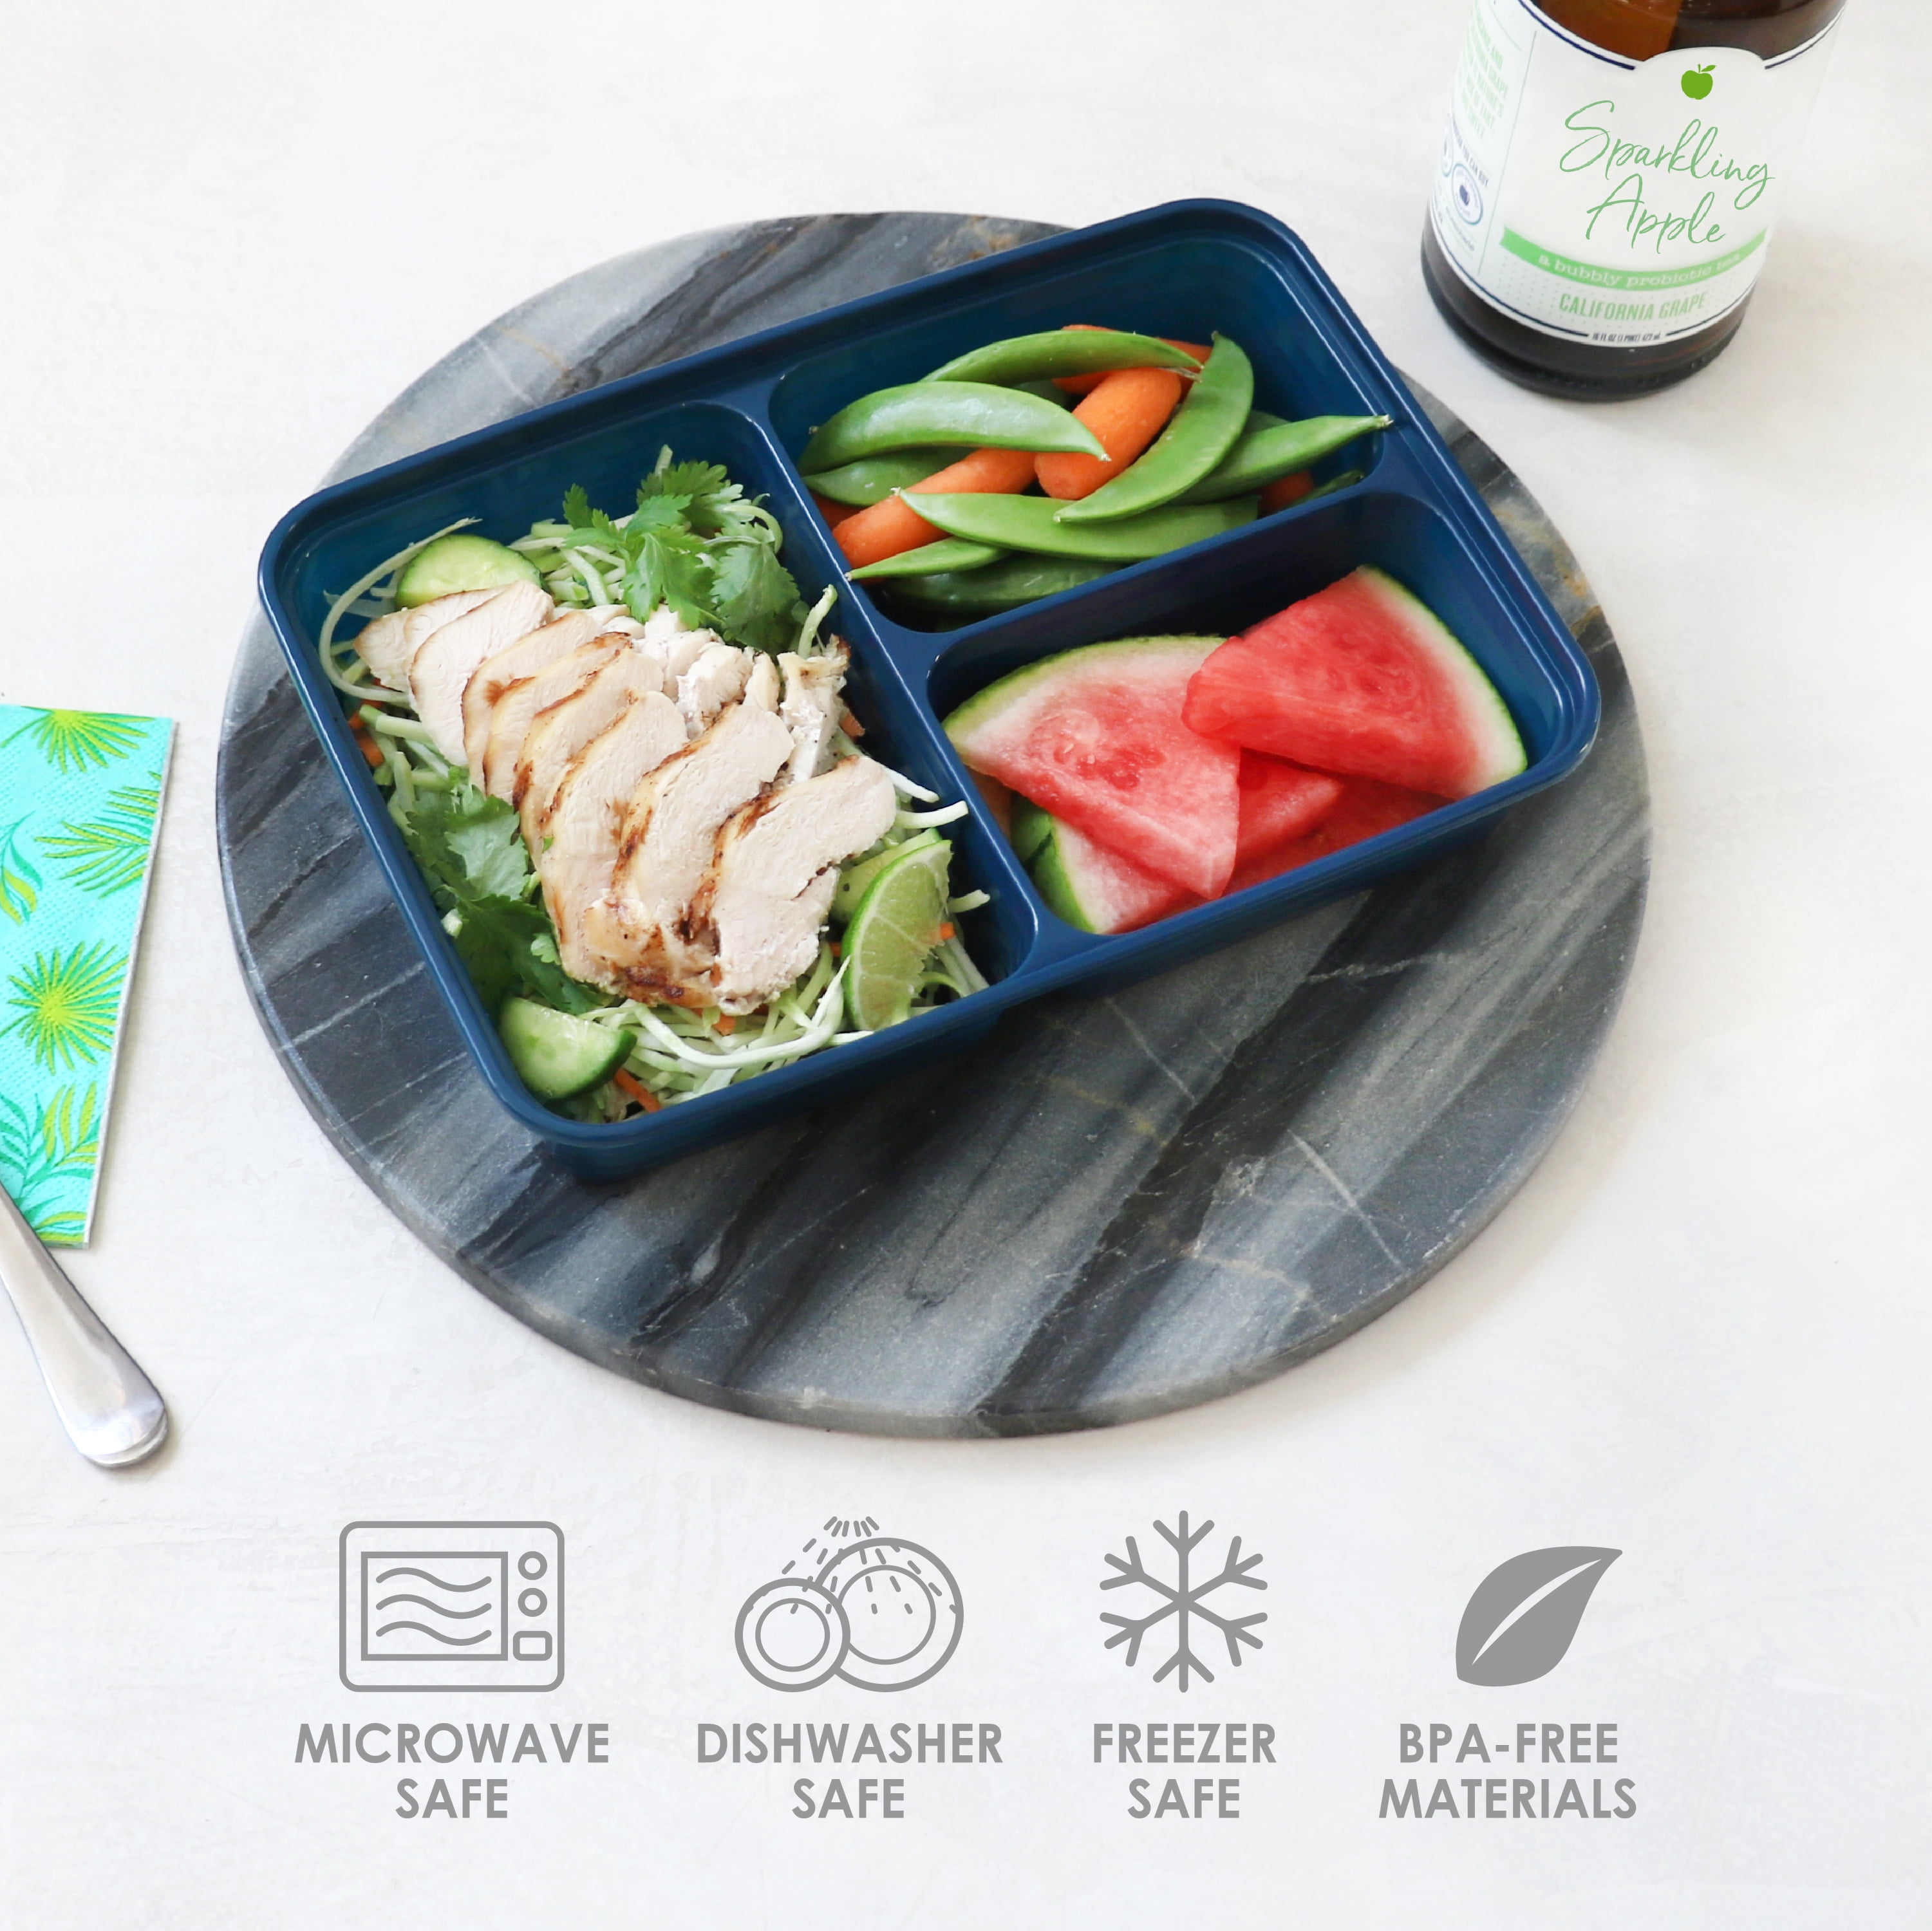 Bentgo® Prep 60-Piece Meal Prep Kit - Reusable Food Containers  1-Compartment, 2-Compartment, & 3-Compartments for Healthy Eating -  Microwave, Freezer